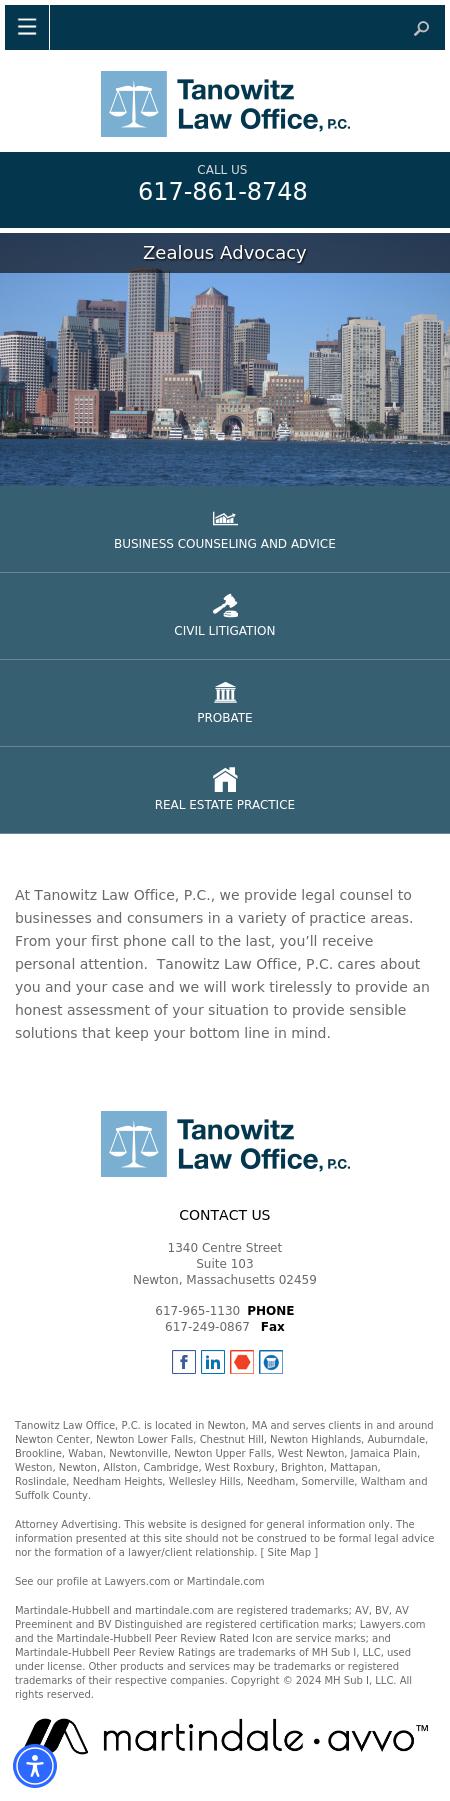 Tanowitz Law Office, P.C. - Newton MA Lawyers